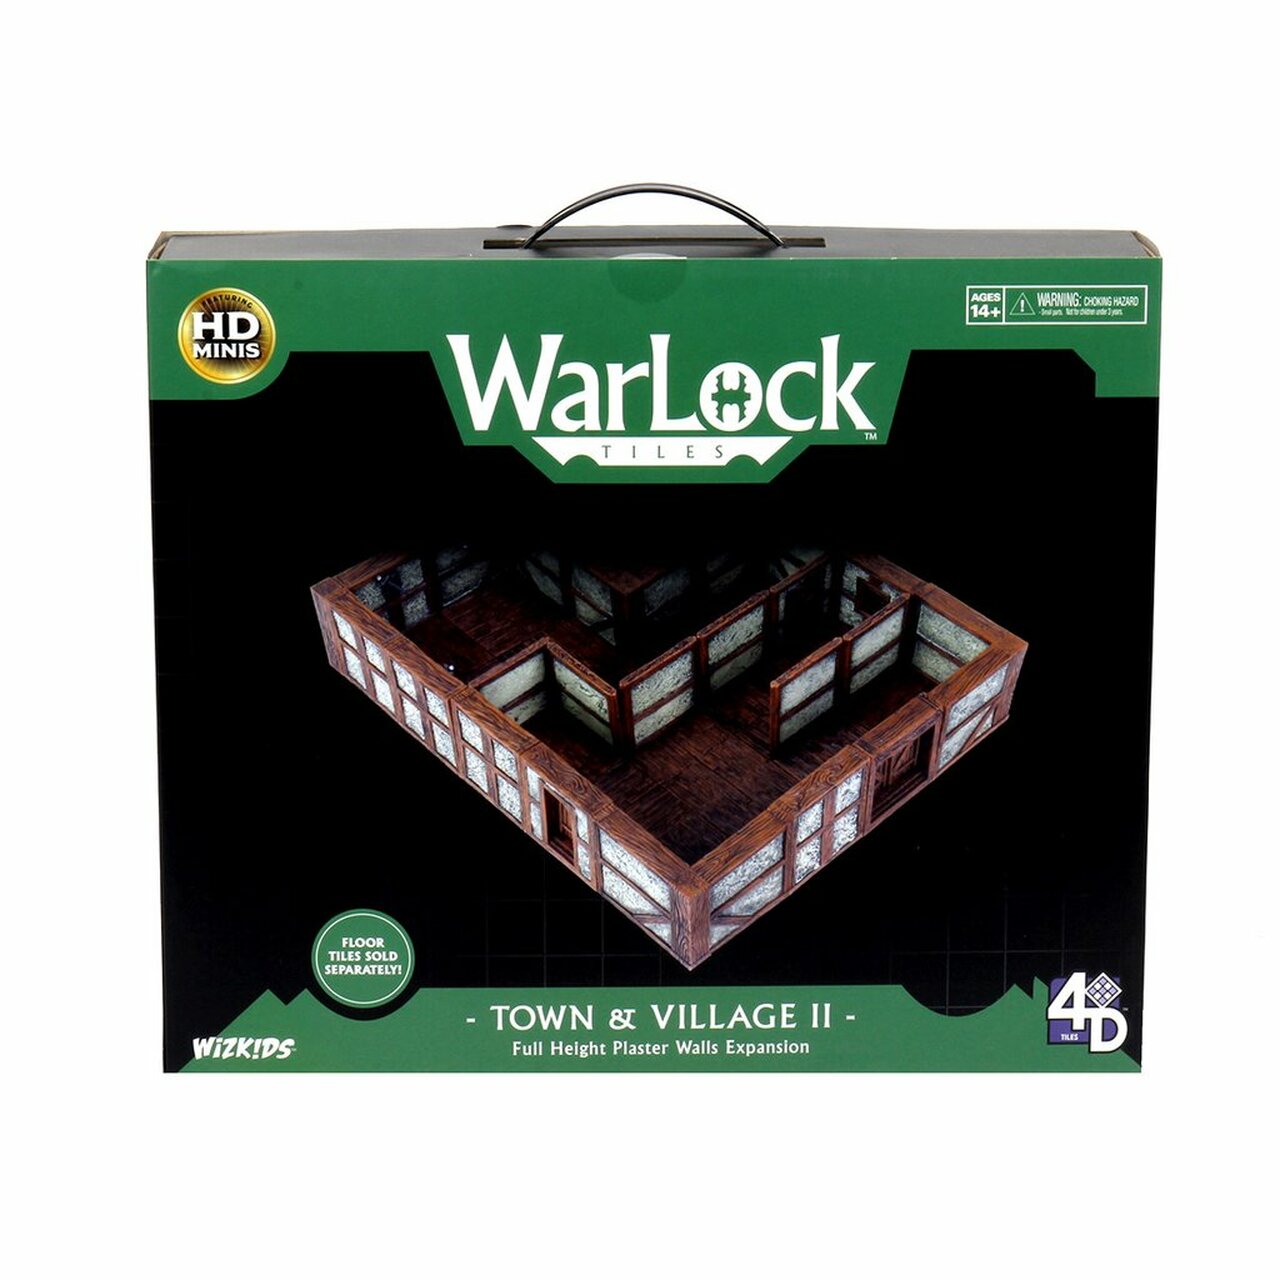 (BSG Certified USED) WarLock Tiles - Town & Village II: Full Height Plaster Walls Expansion